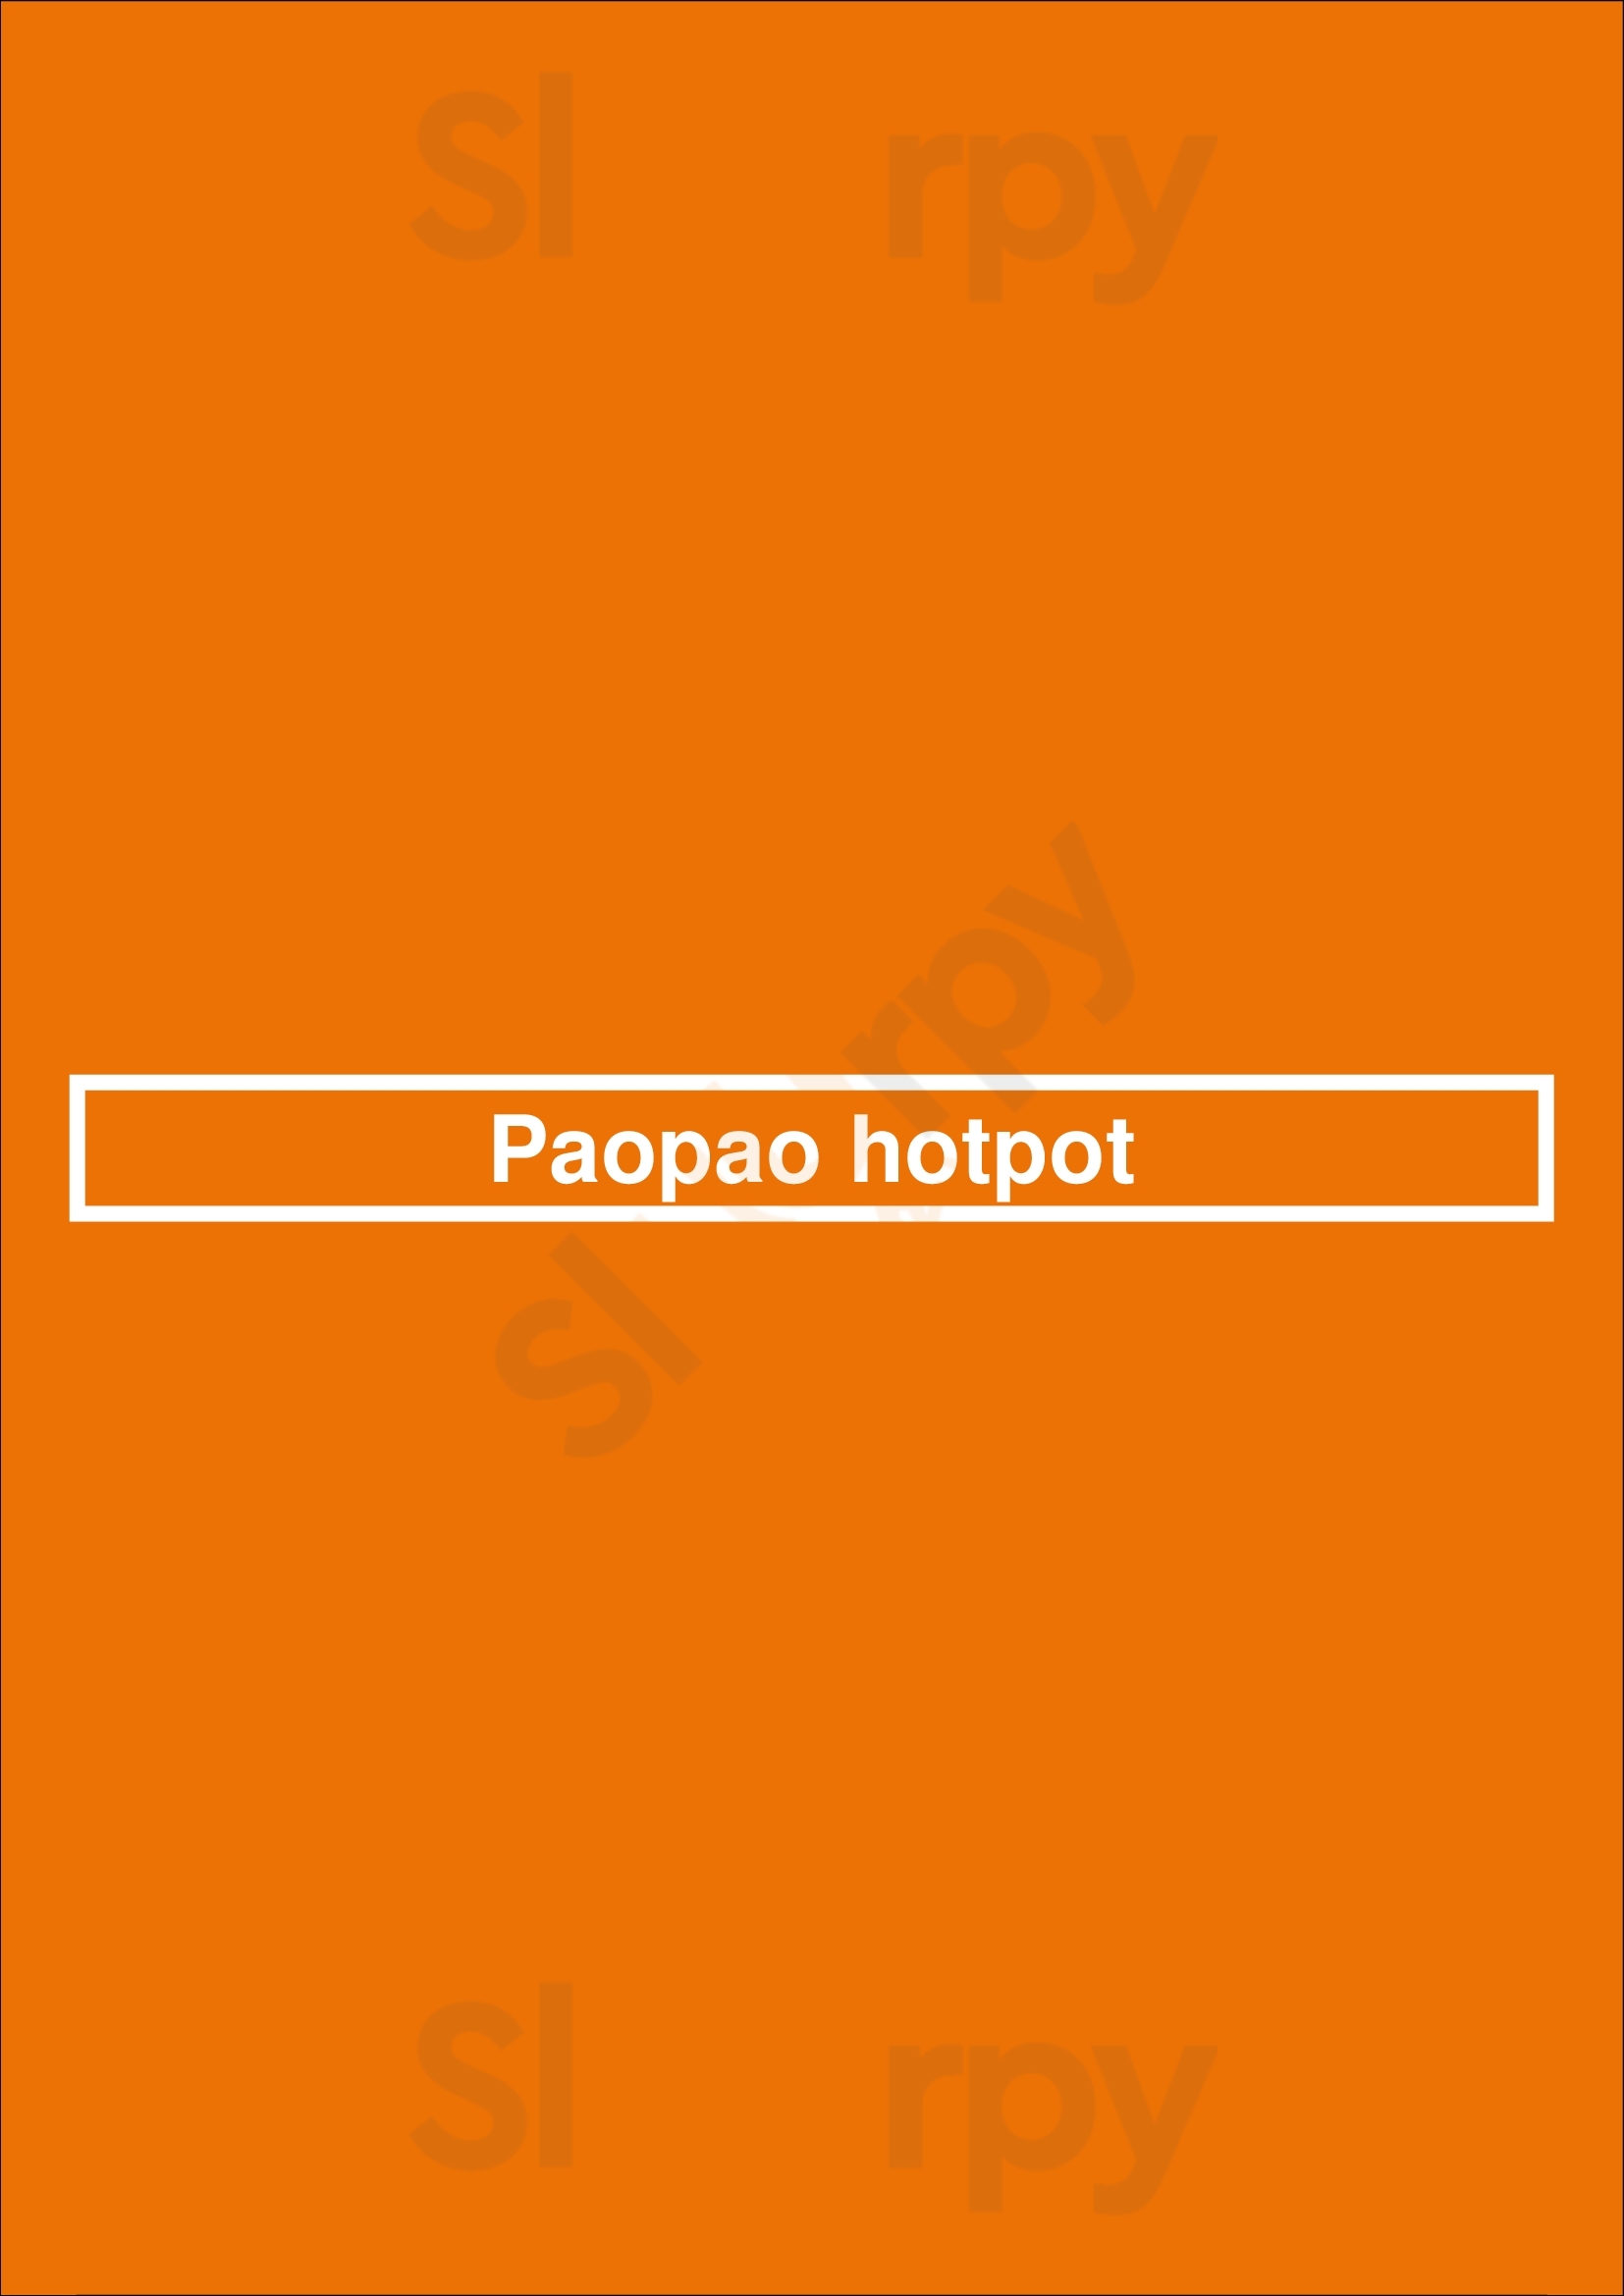 Paopao Hotpot Valencia Menu - 1